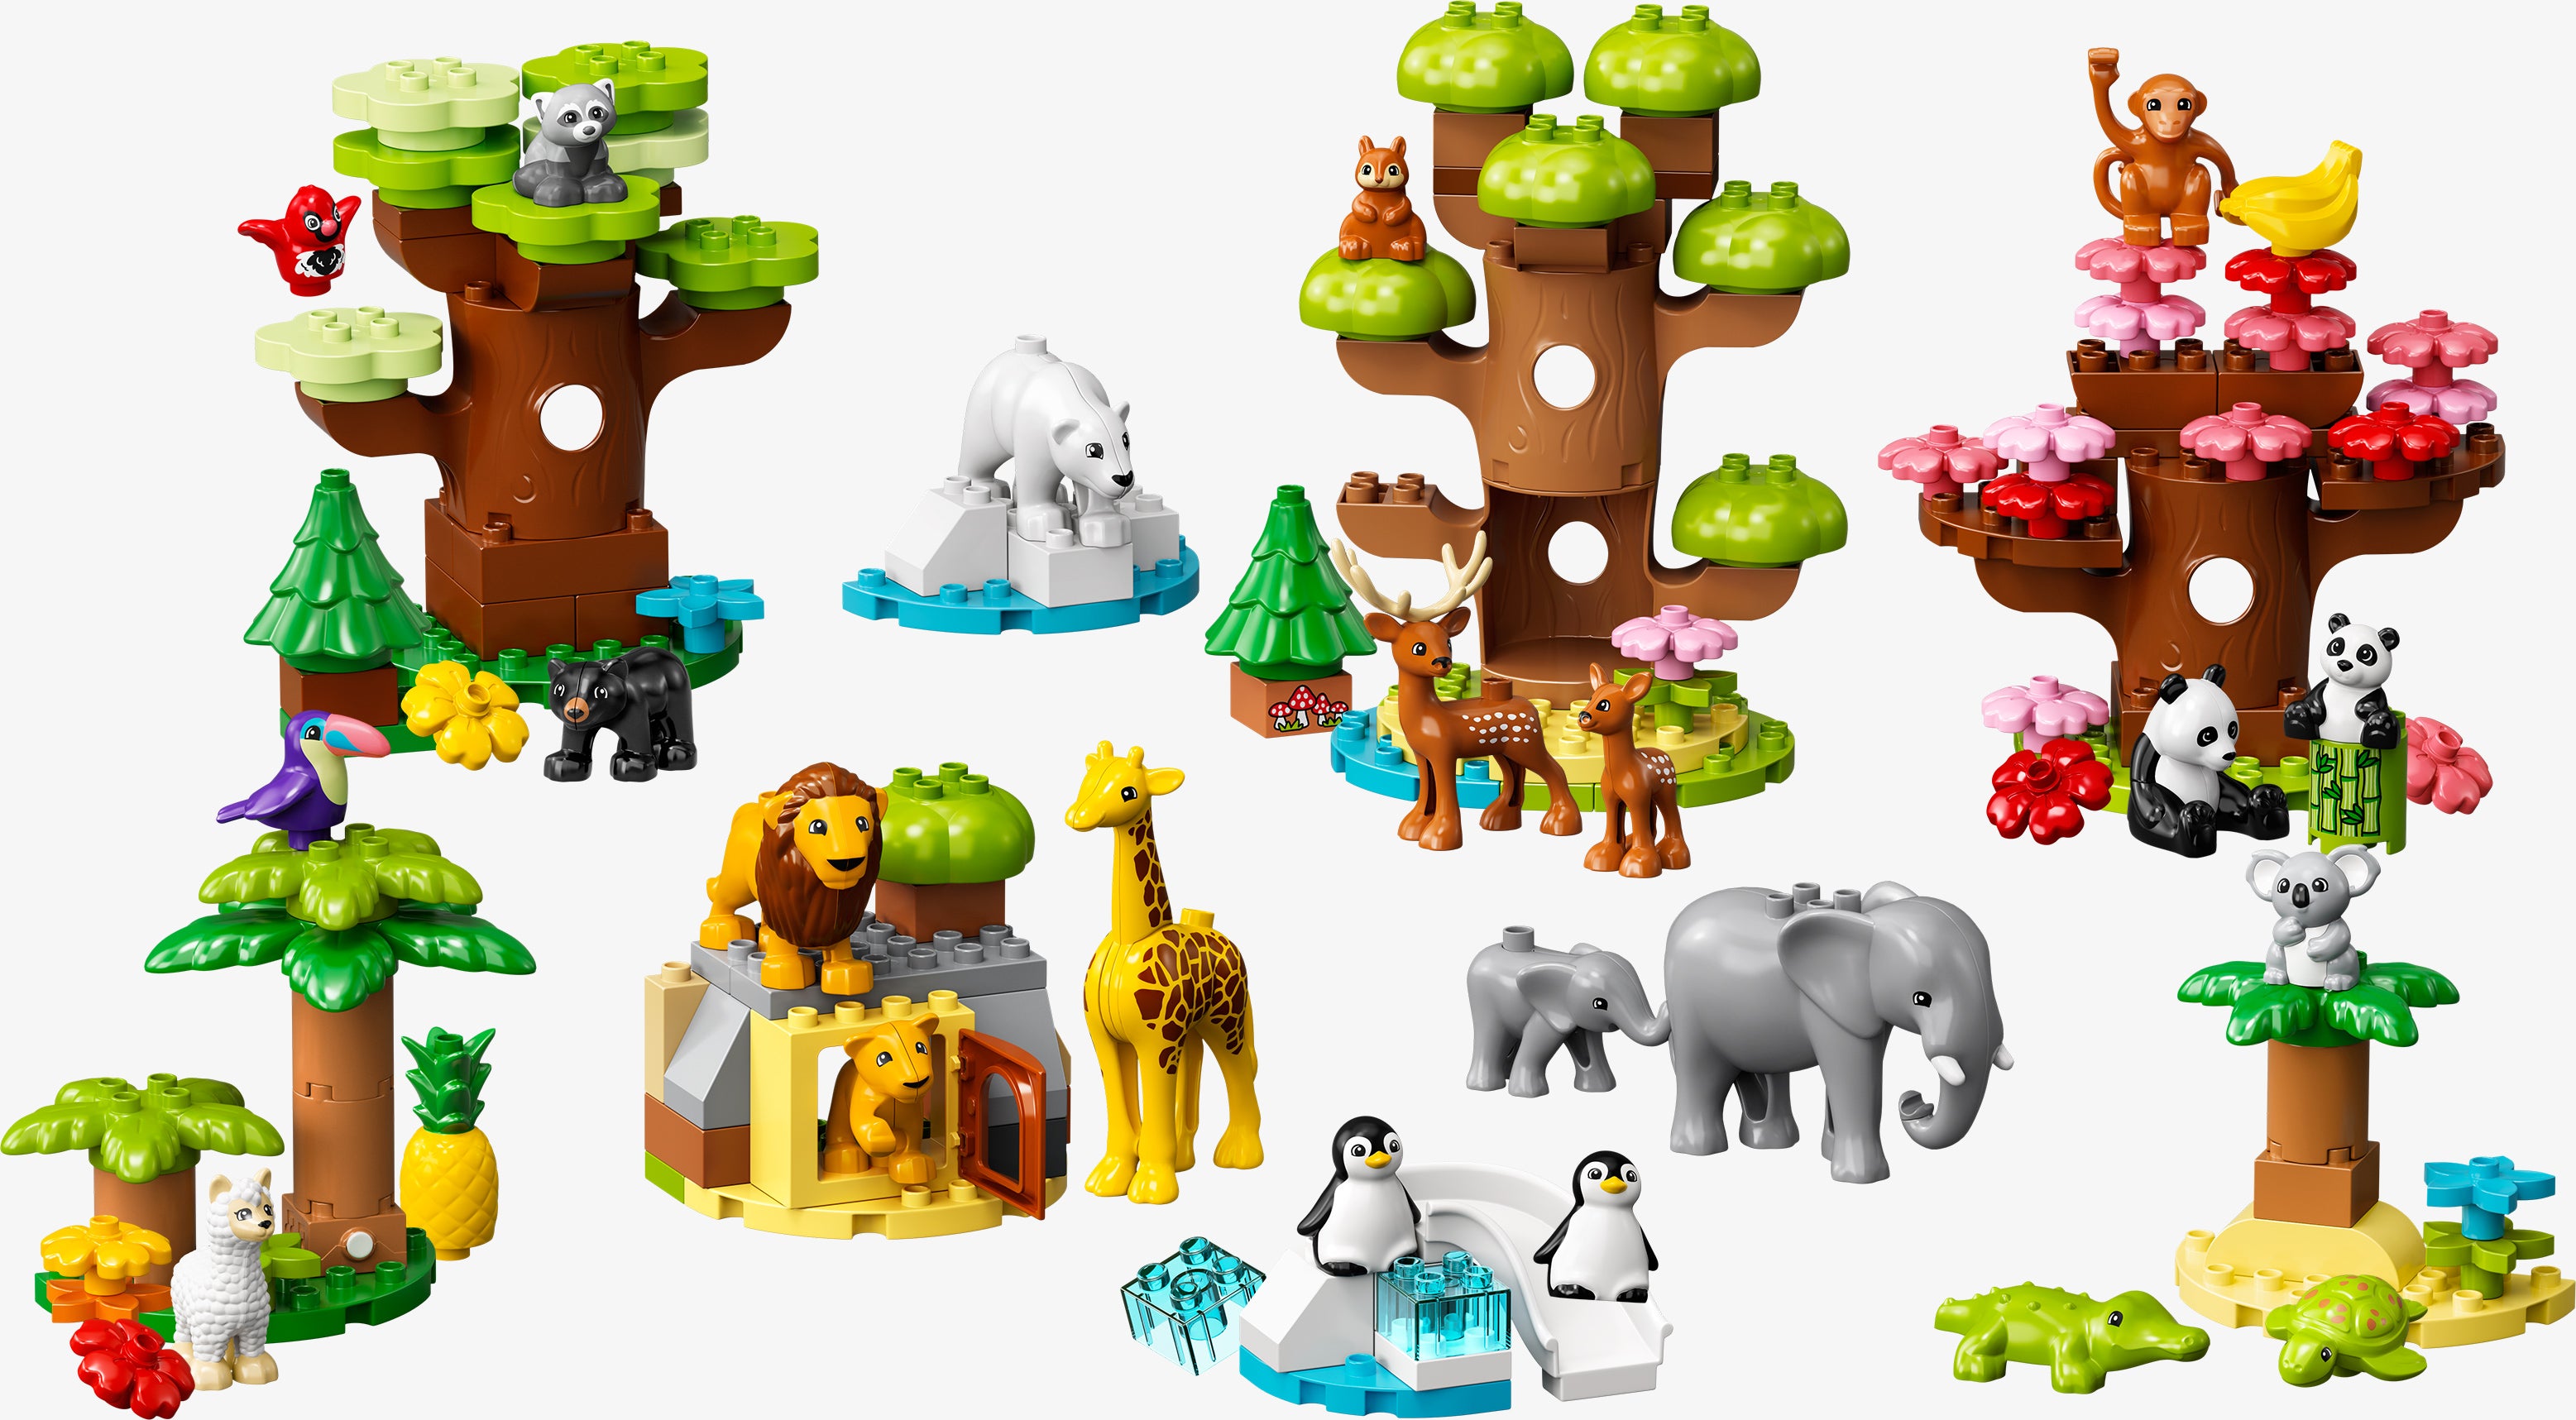 LEGO Duplo Wild Animals of the World 10975